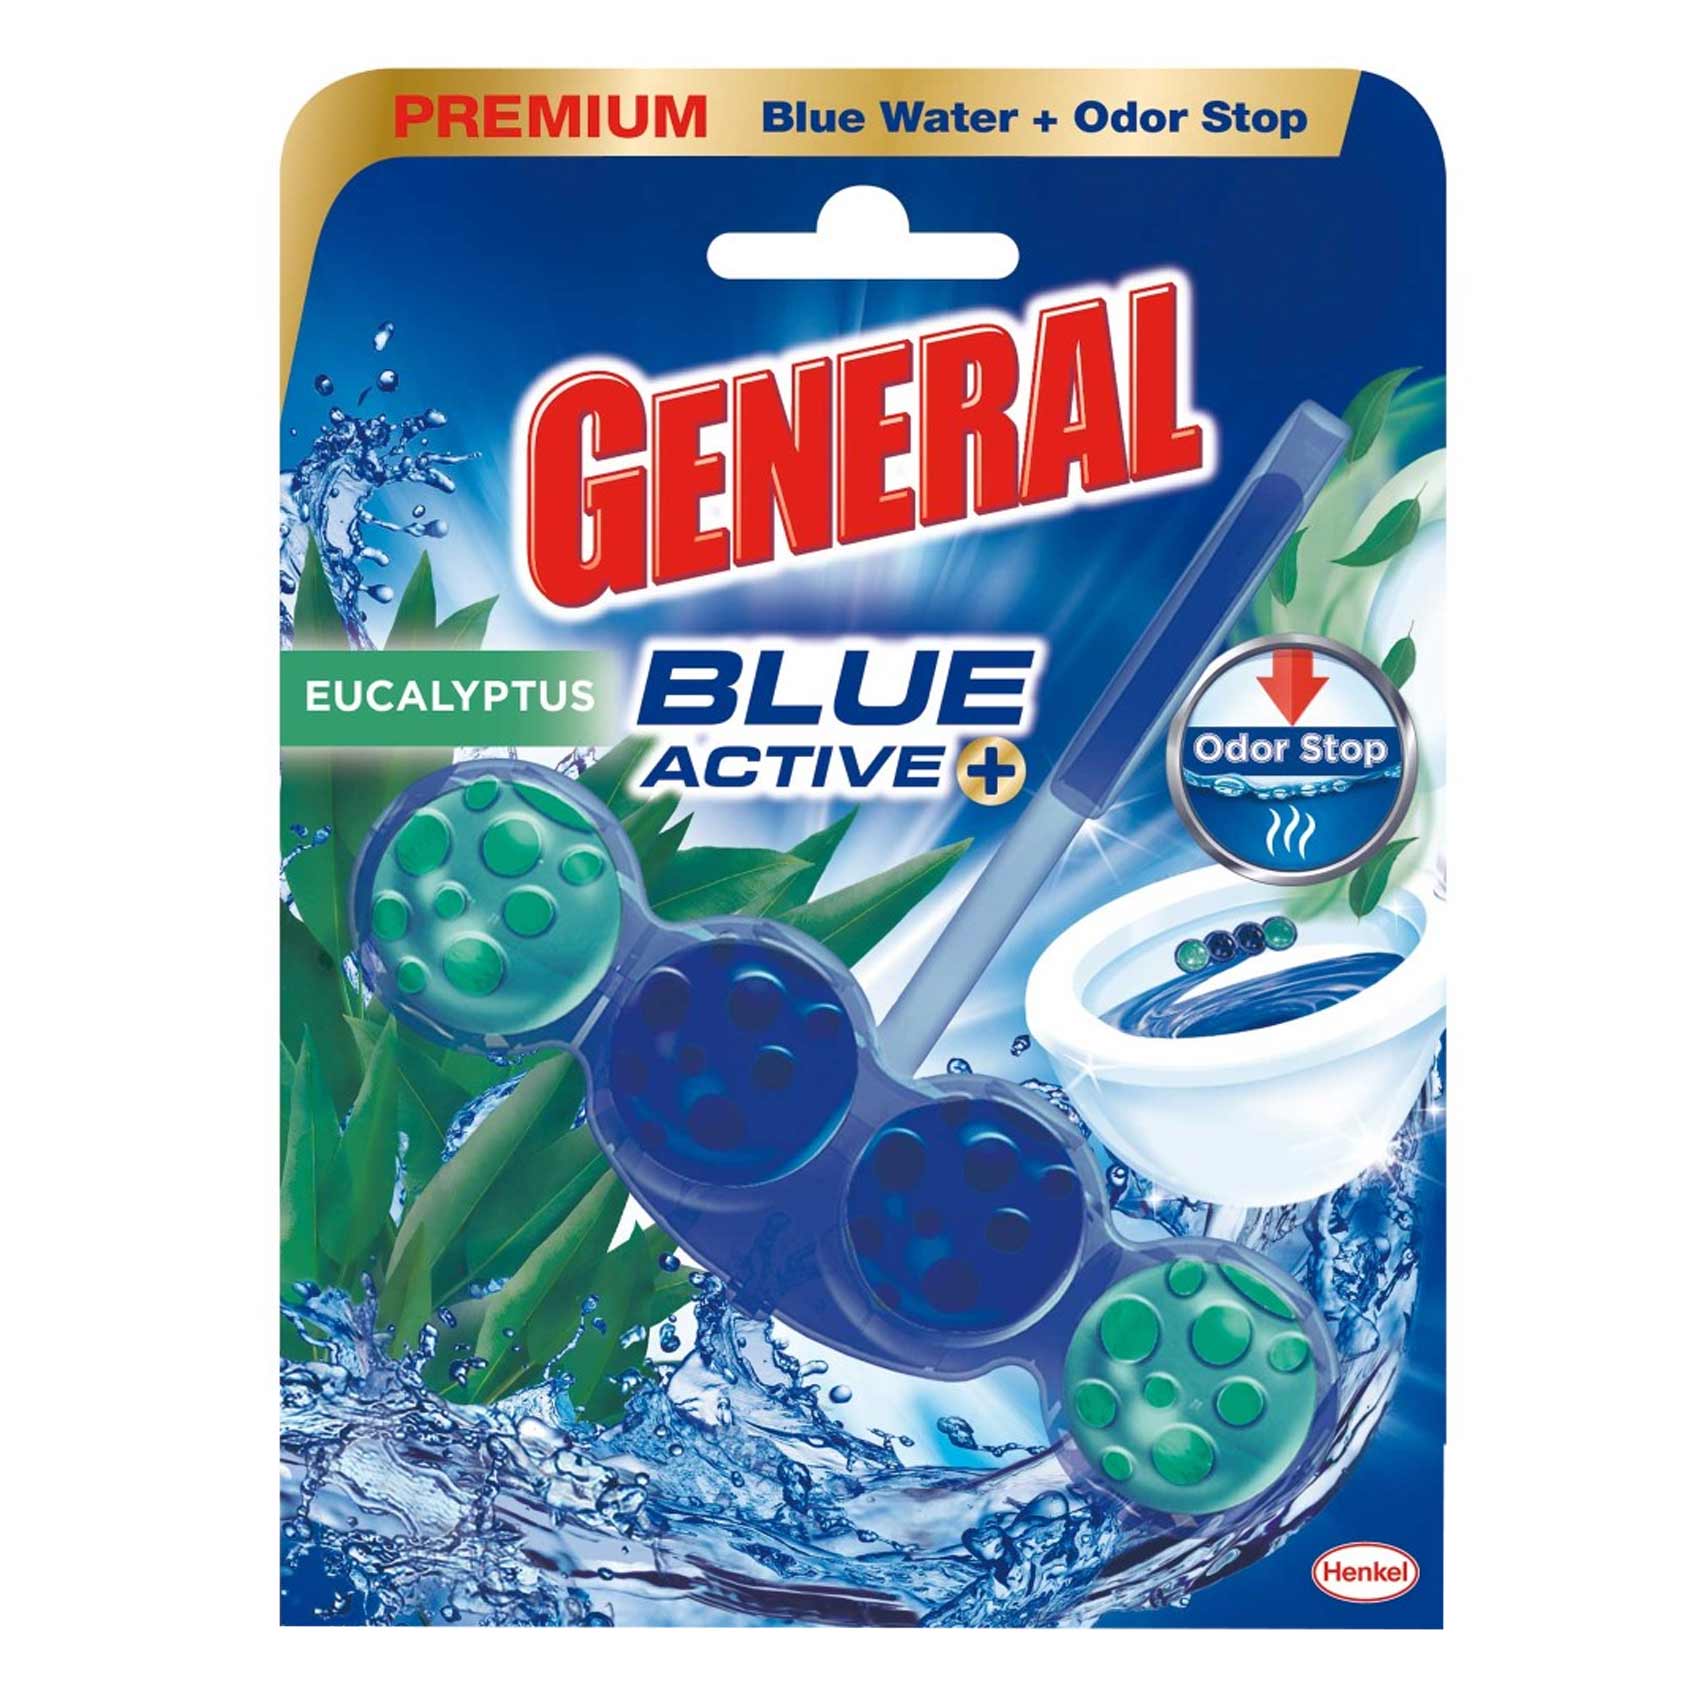 Dergeneral Blue Water Eucalyptus 50GR